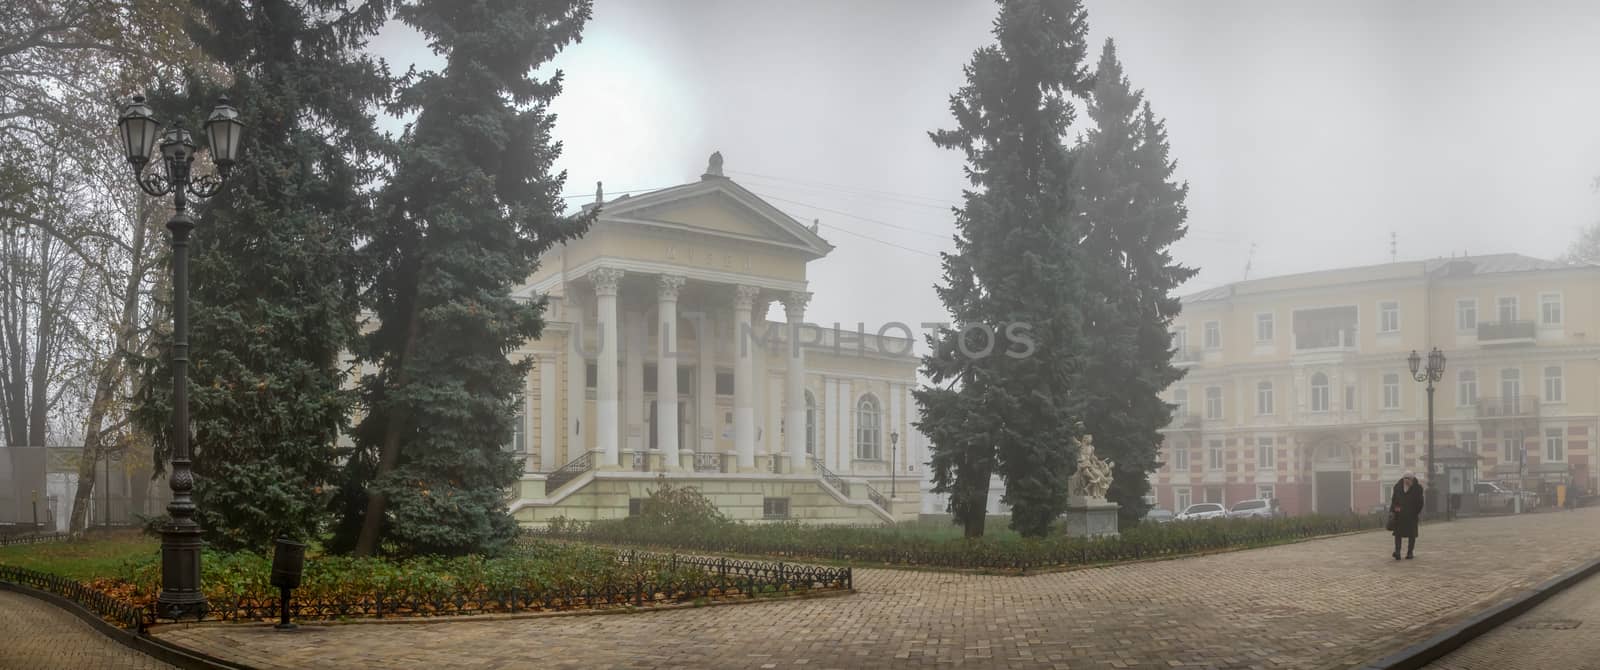 Archaeological Museum in Odessa, Ukraine by Multipedia